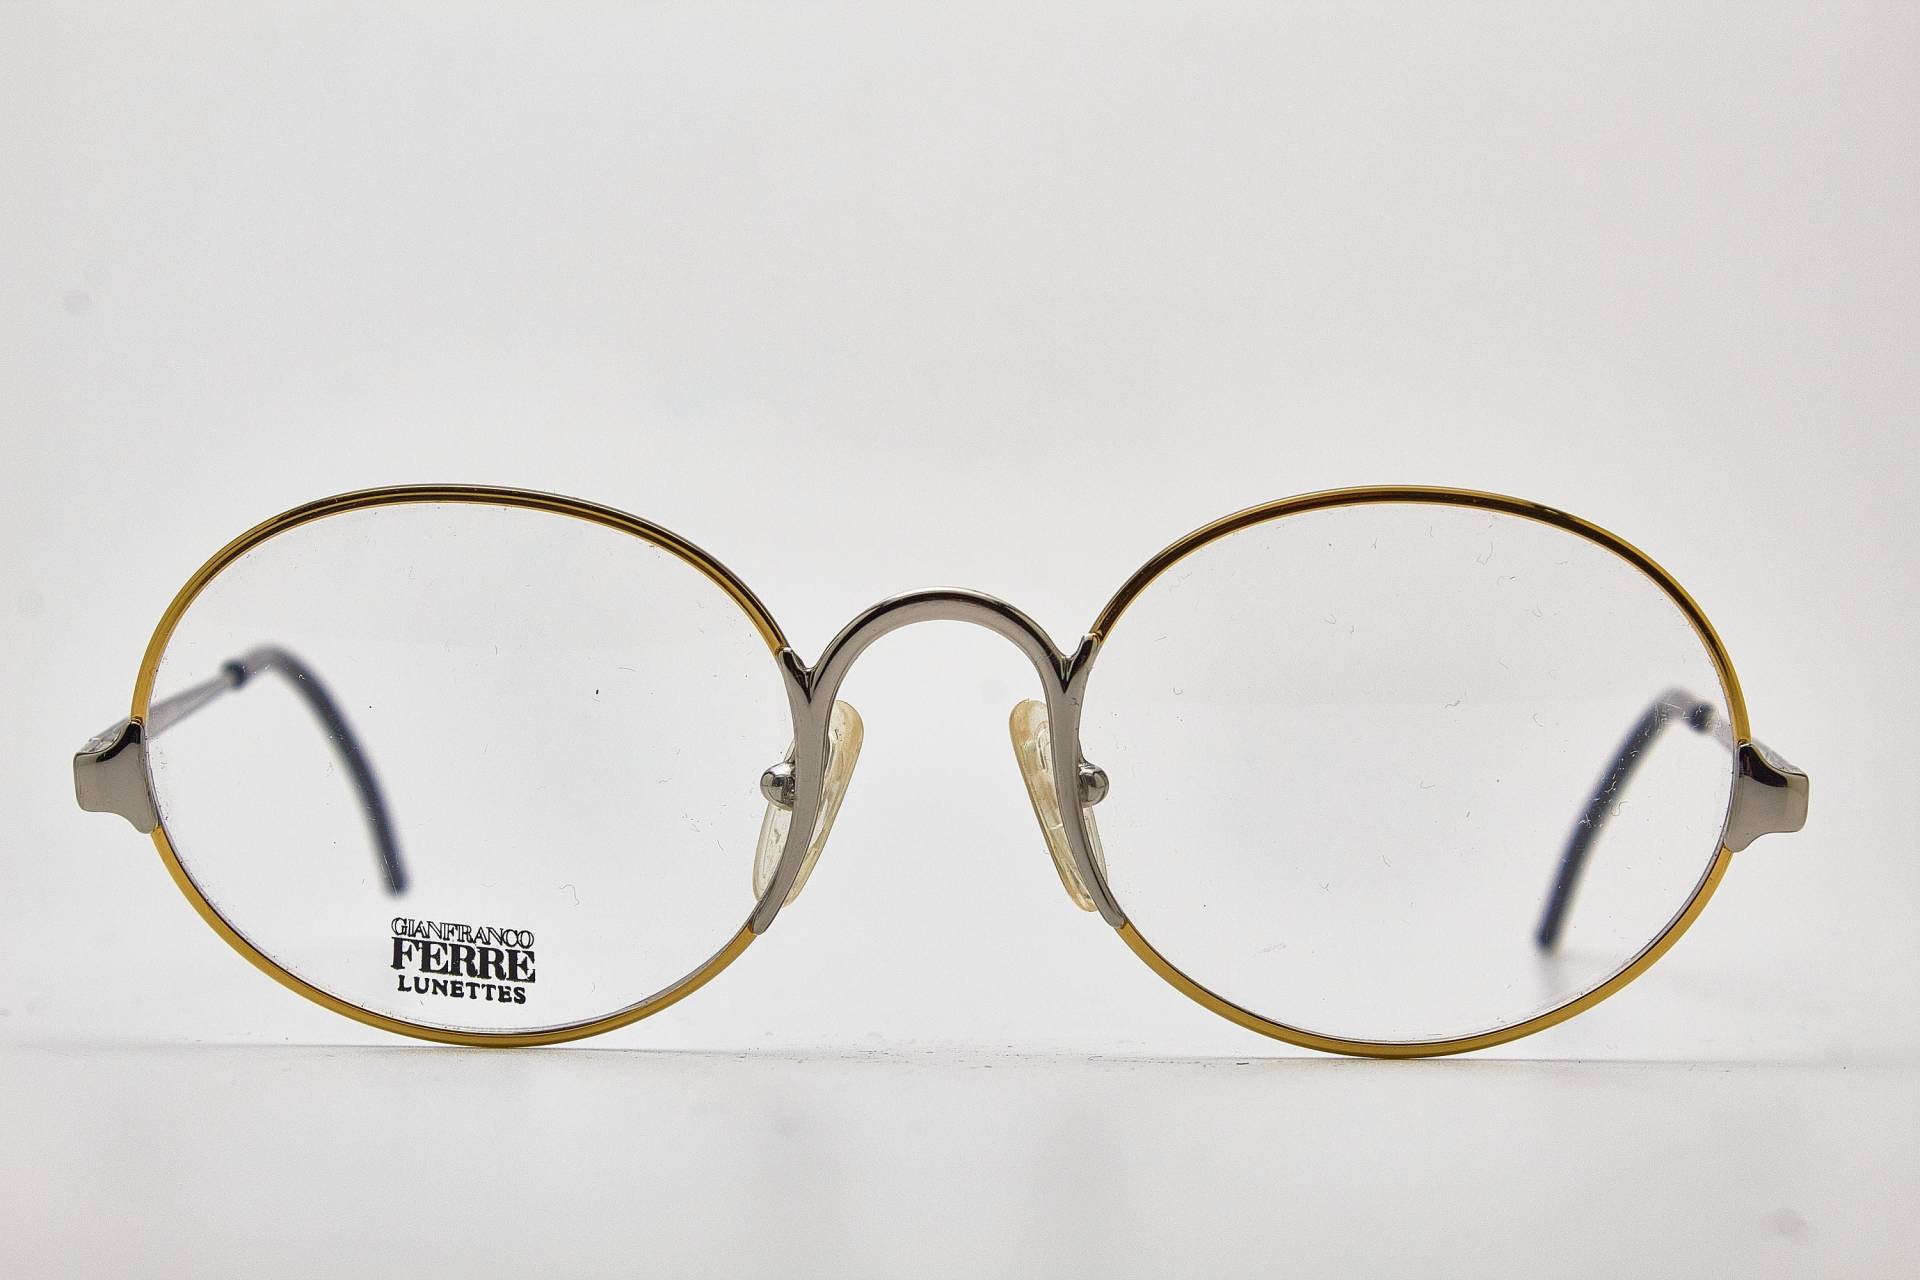 Gianfranco Ferre Gff50 39F 51 Silver Gold Oval Frame/Golden Glasses/Oval Glasses/Vintage Eye Glasses/1980S Sunglasses/Oval Eyeglasses 1980S von VintageGlassesVault